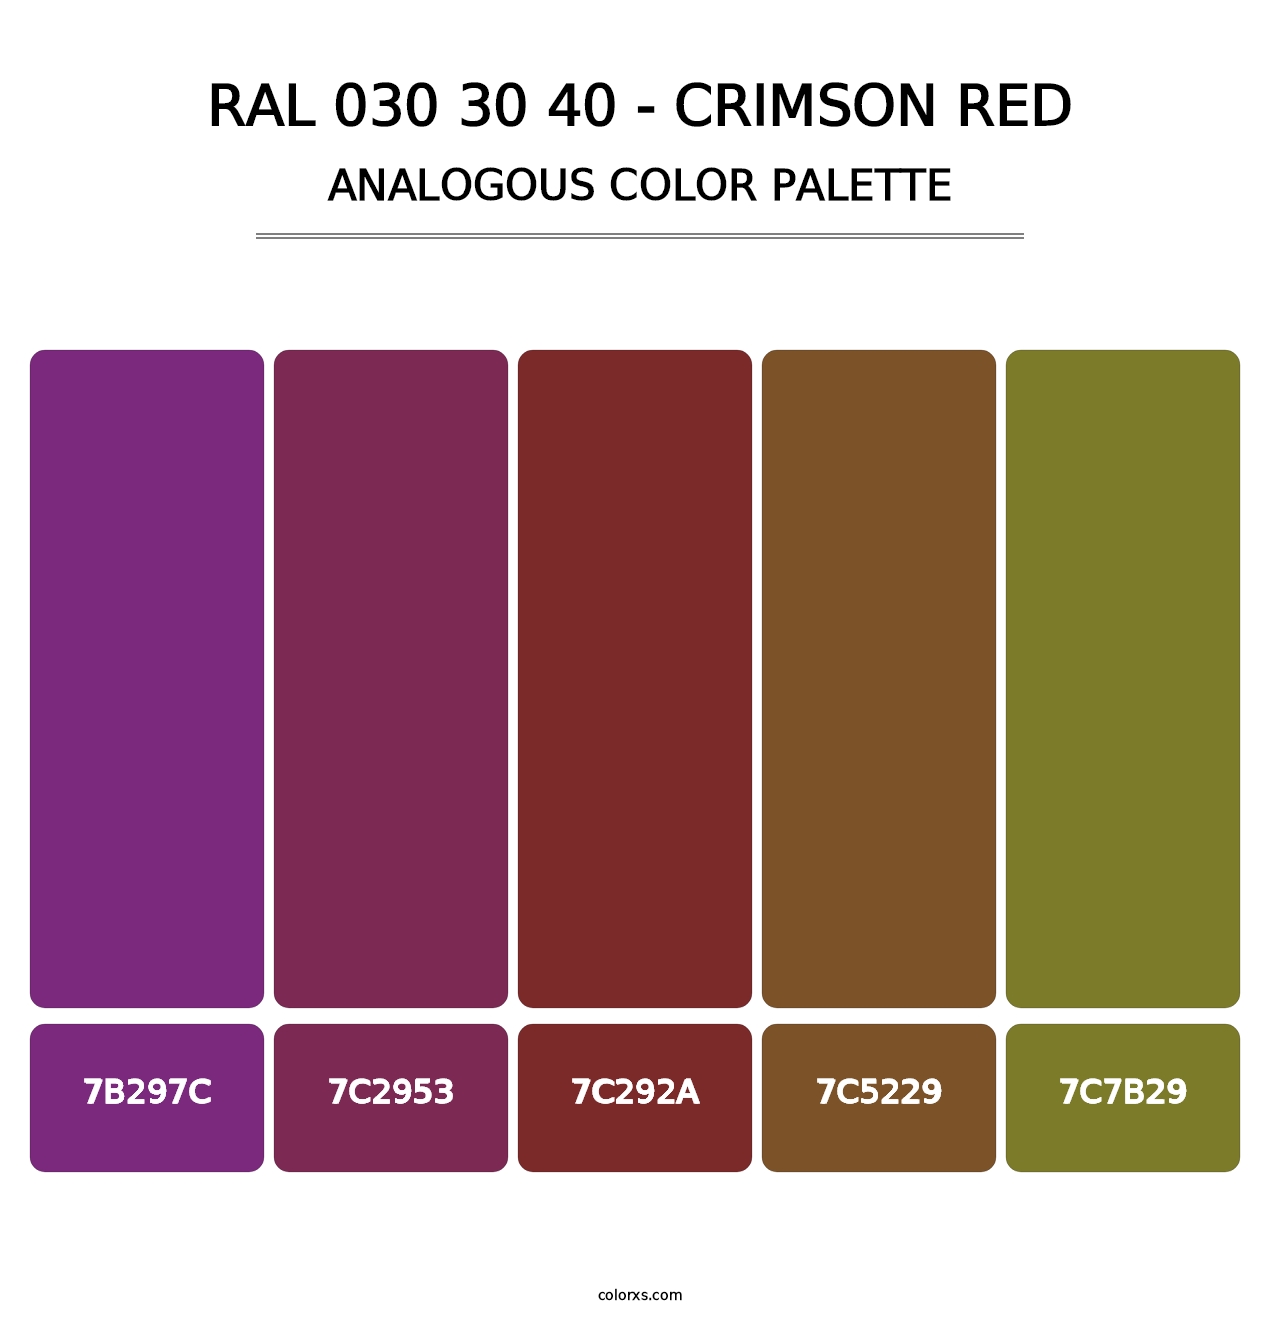 RAL 030 30 40 - Crimson Red - Analogous Color Palette